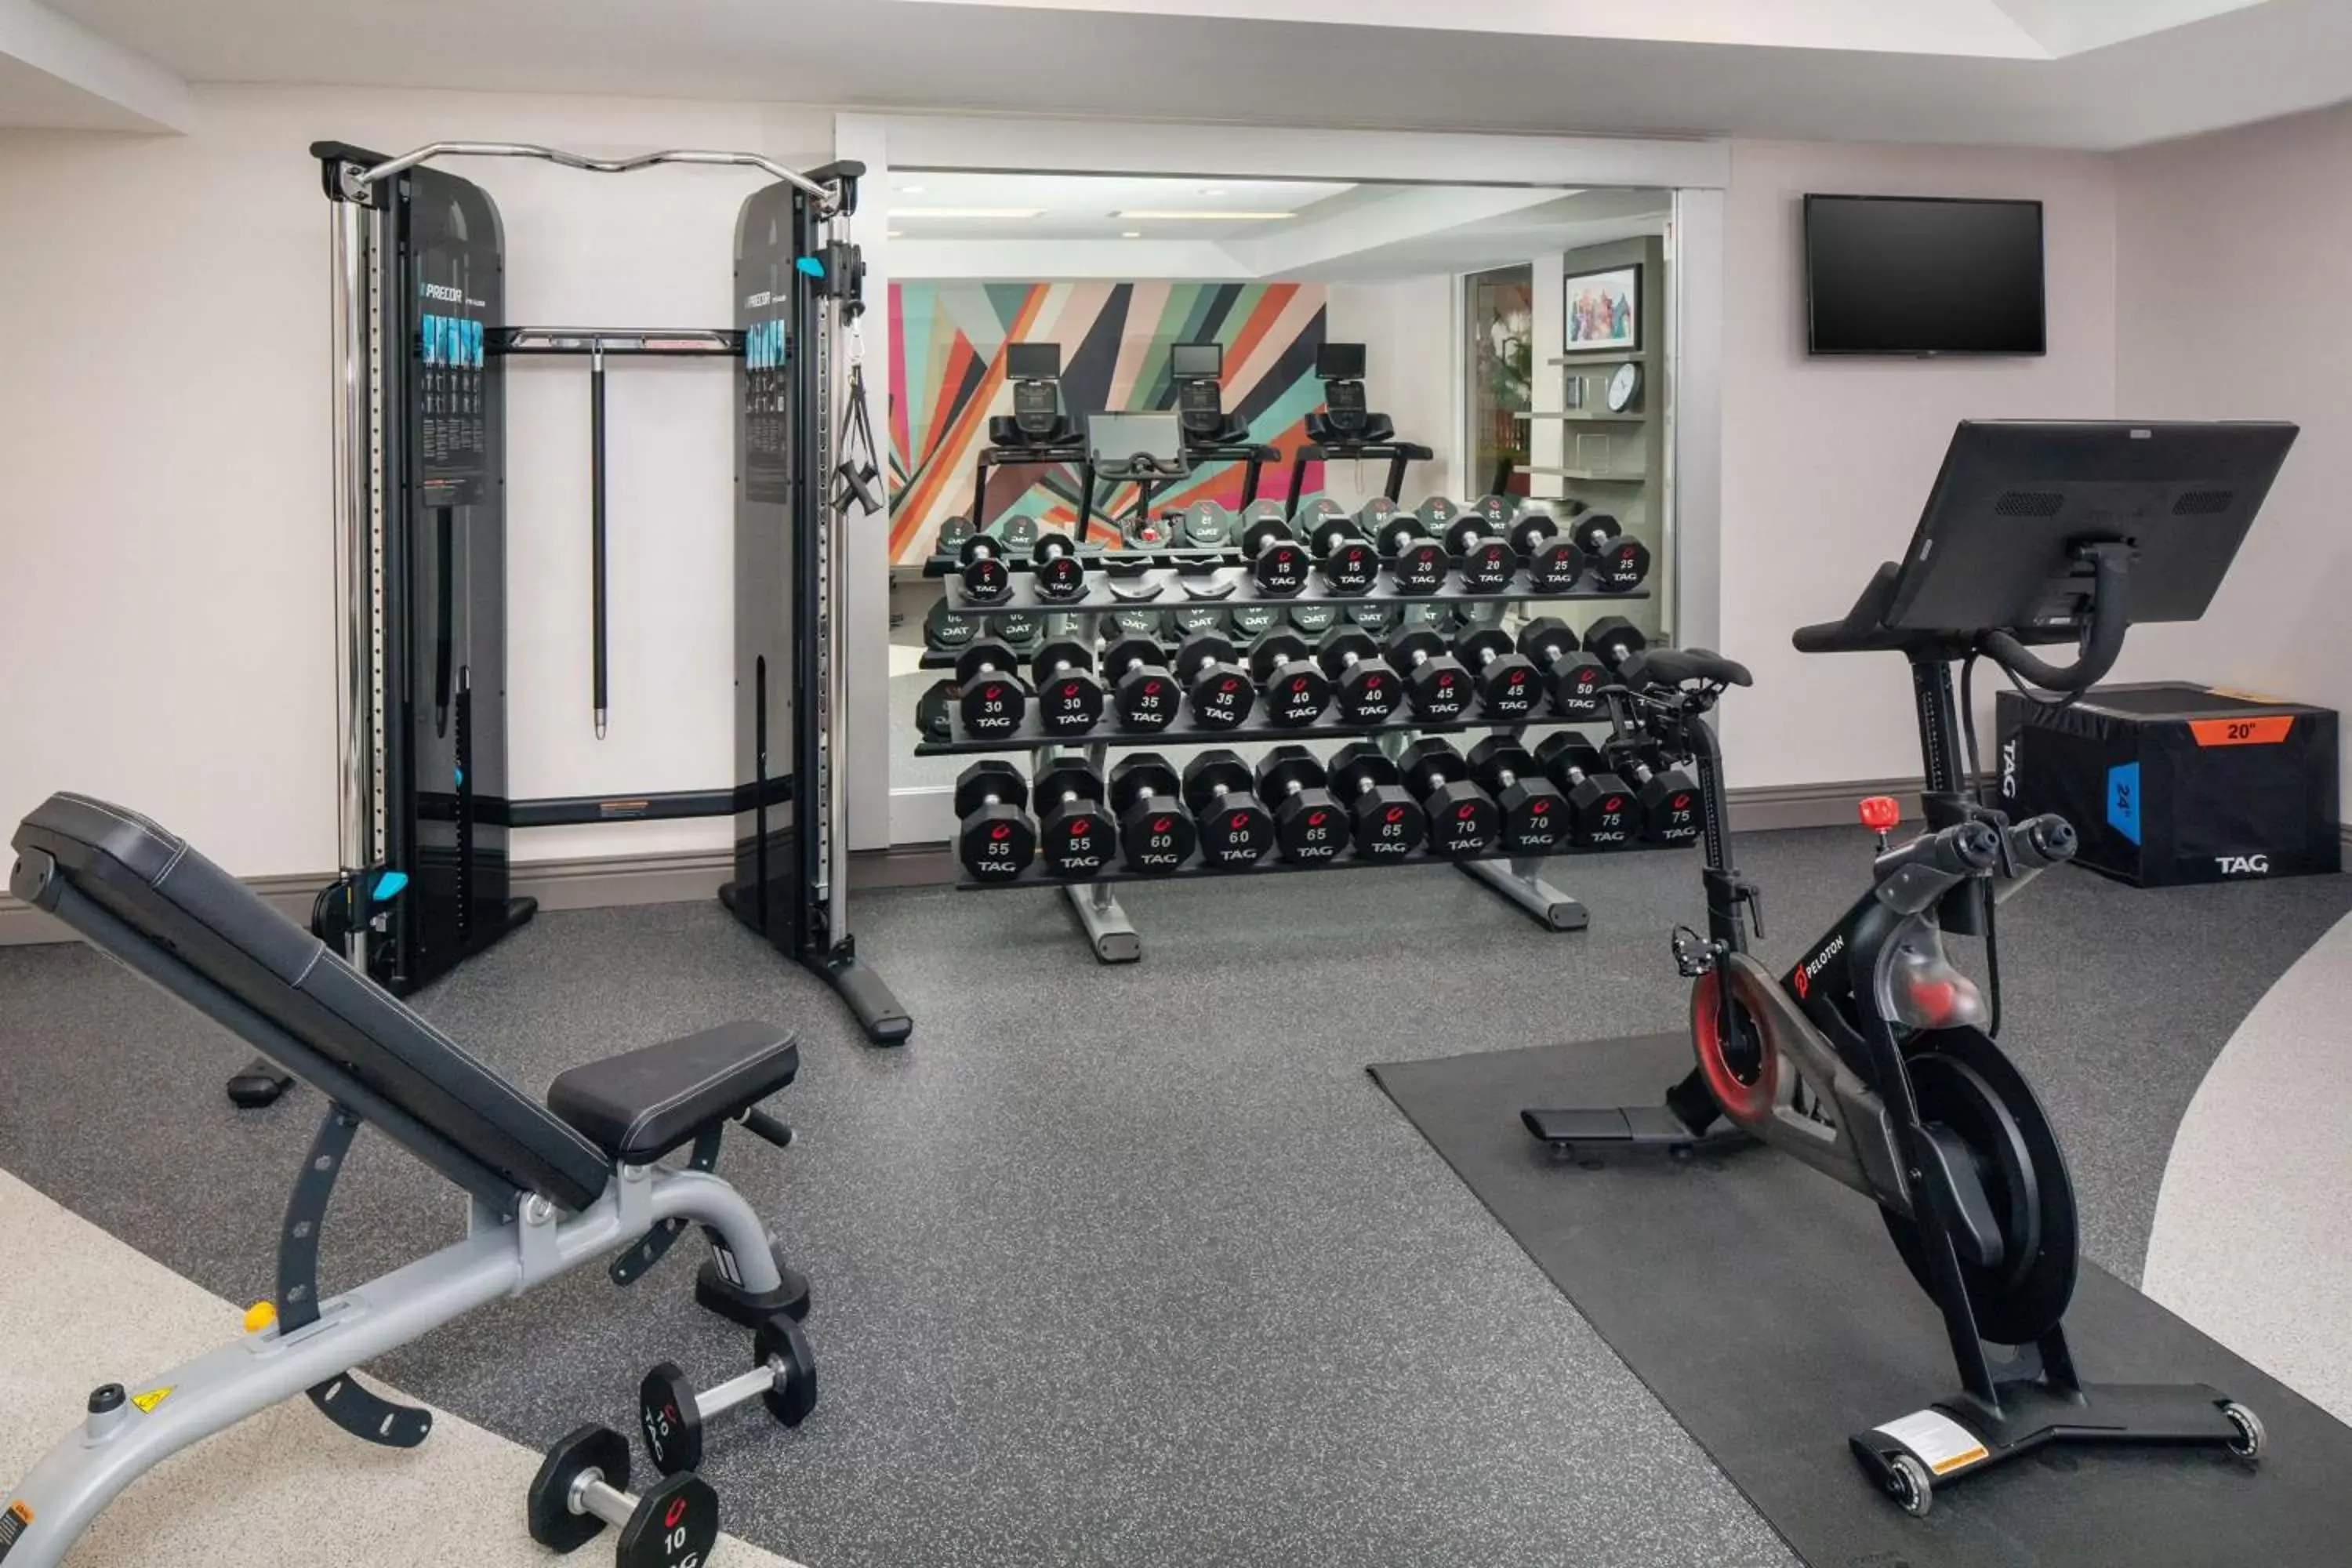 Fitness centre/facilities, Fitness Center/Facilities in Hilton Garden Inn Arcadia/Pasadena Area